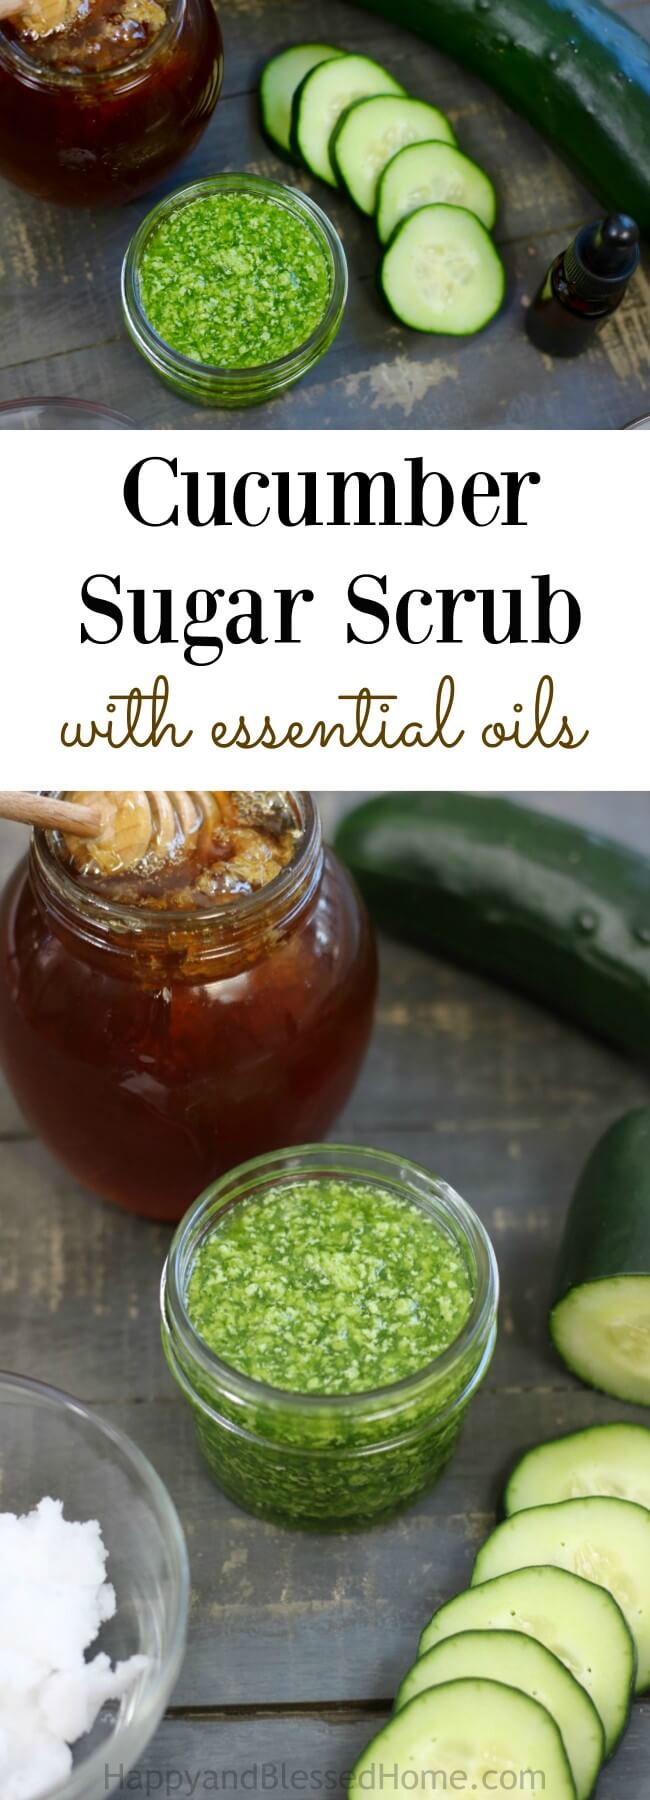 Easy DIY Cucumber Sugar Scrub with Essential Oils for an easy beauty routine